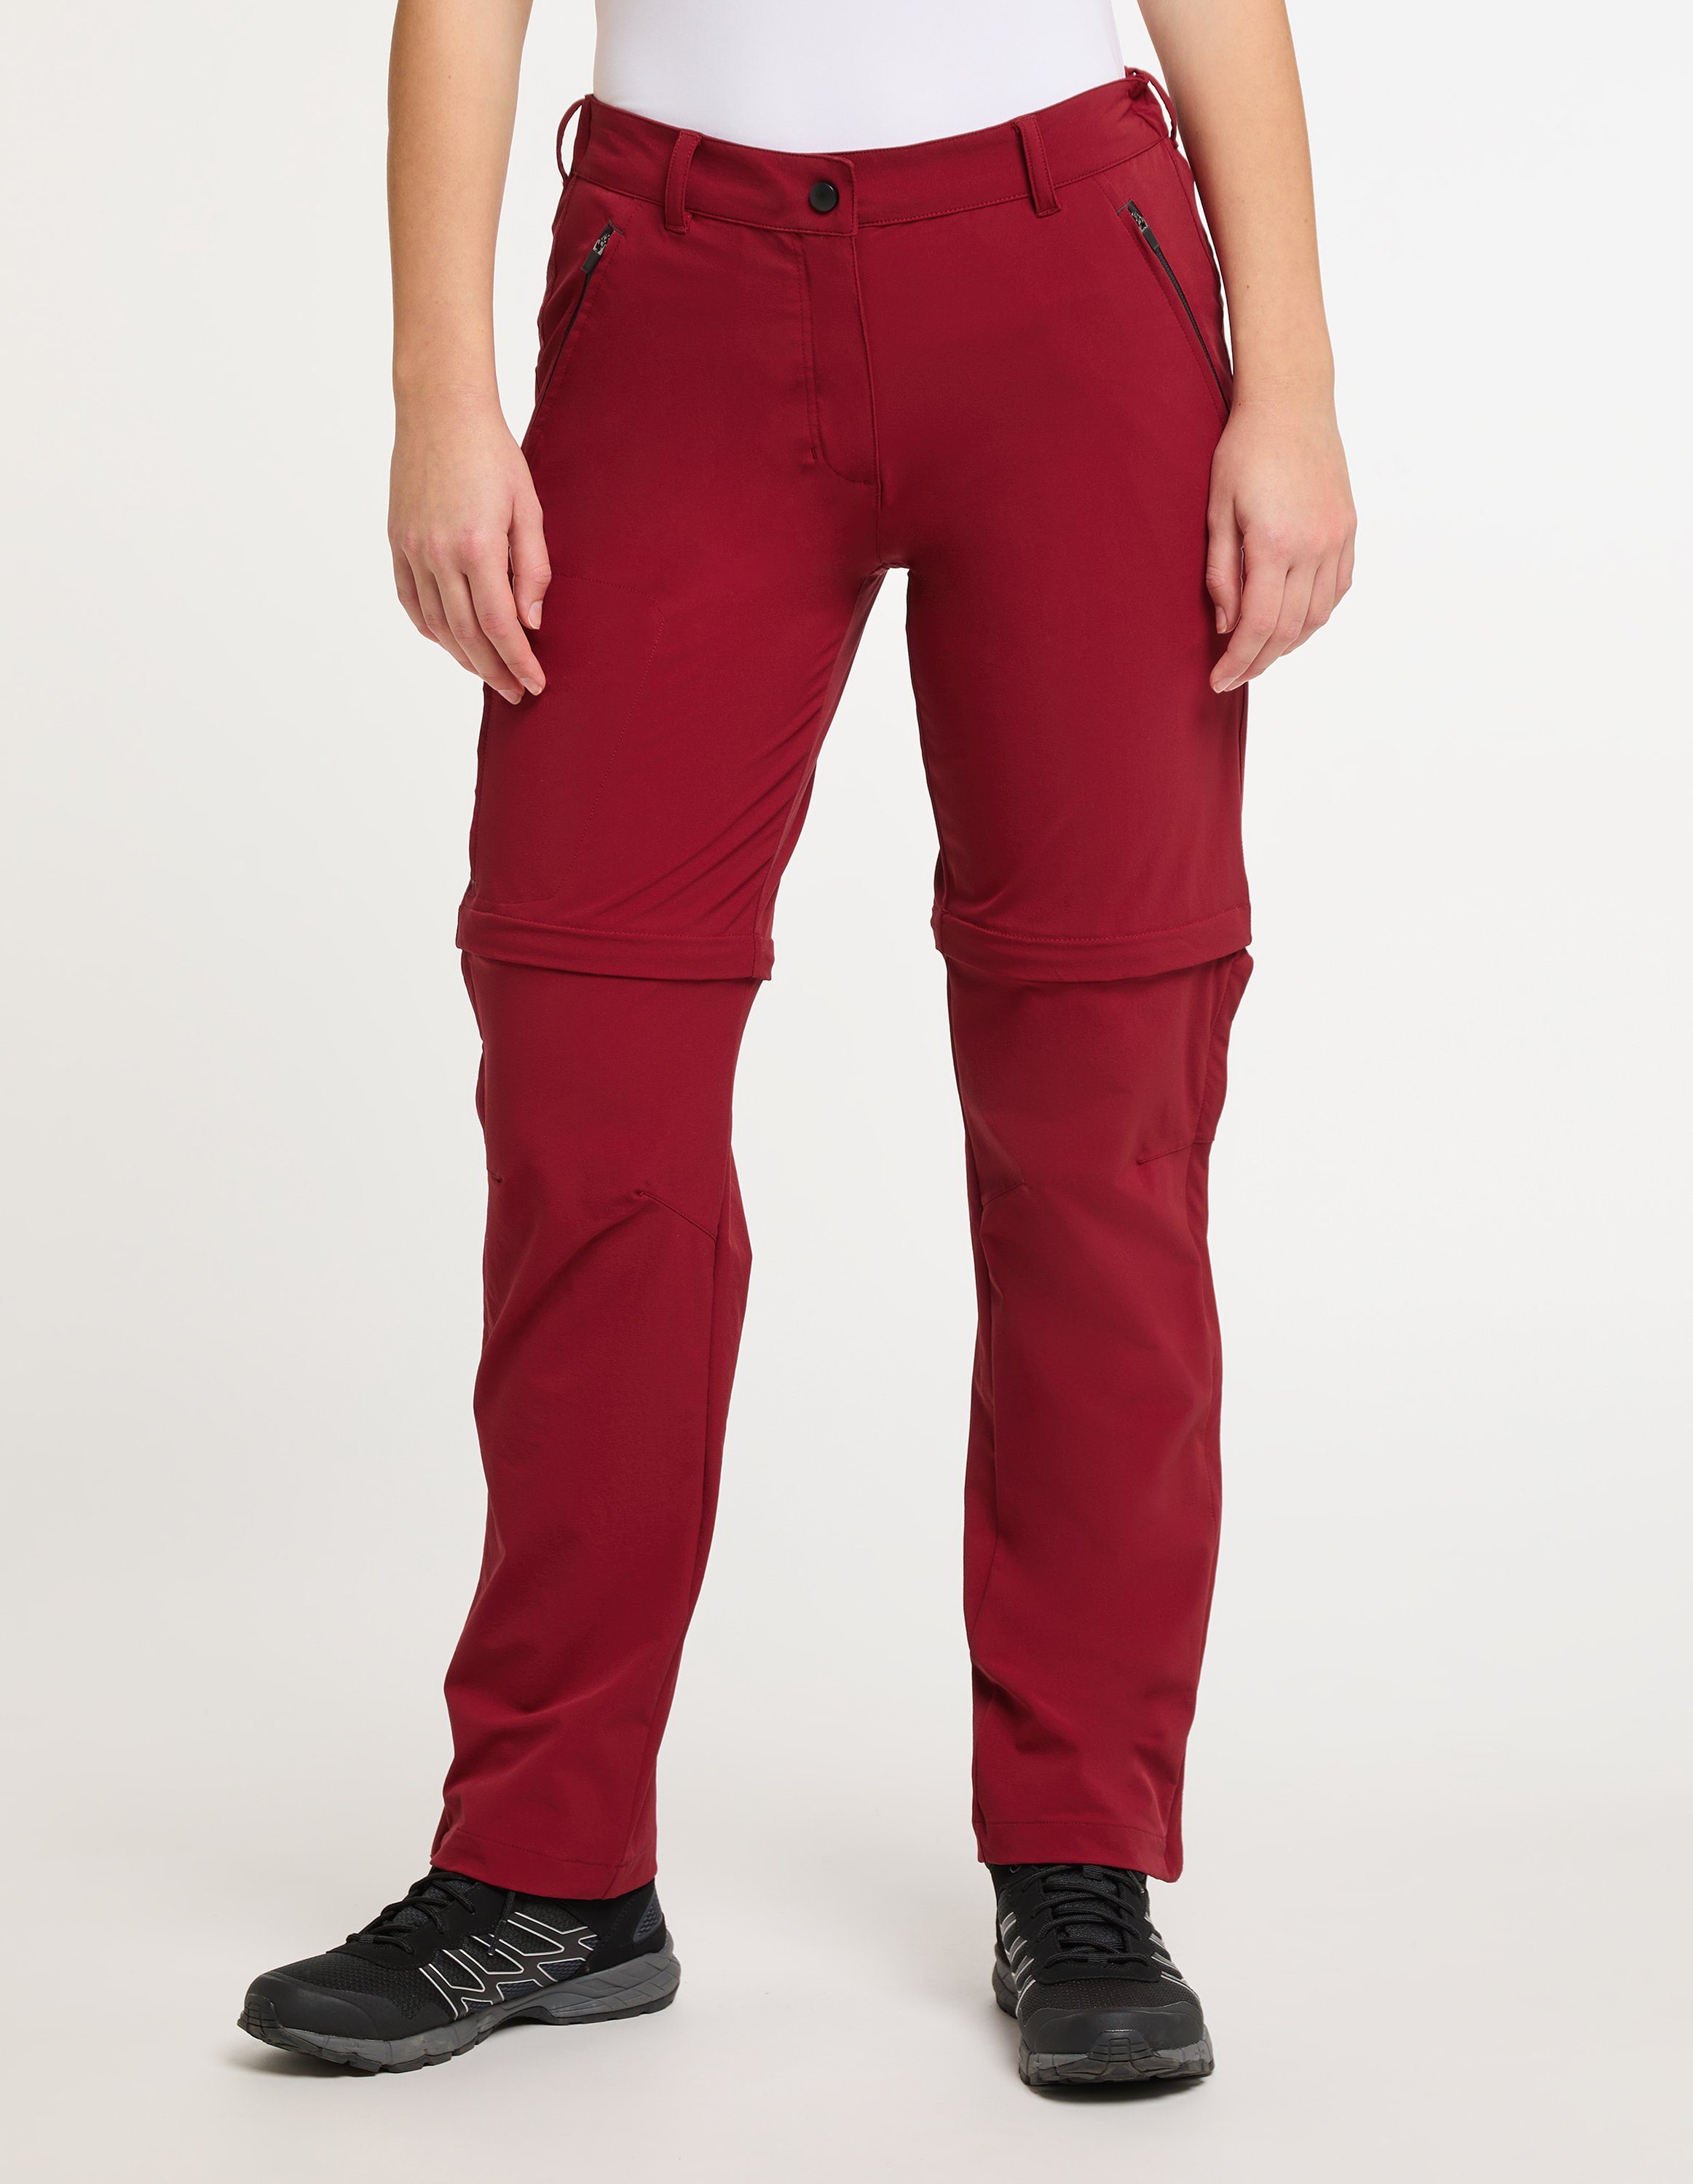 red Tofino crimson Hose Hot-Sportswear Sporthose